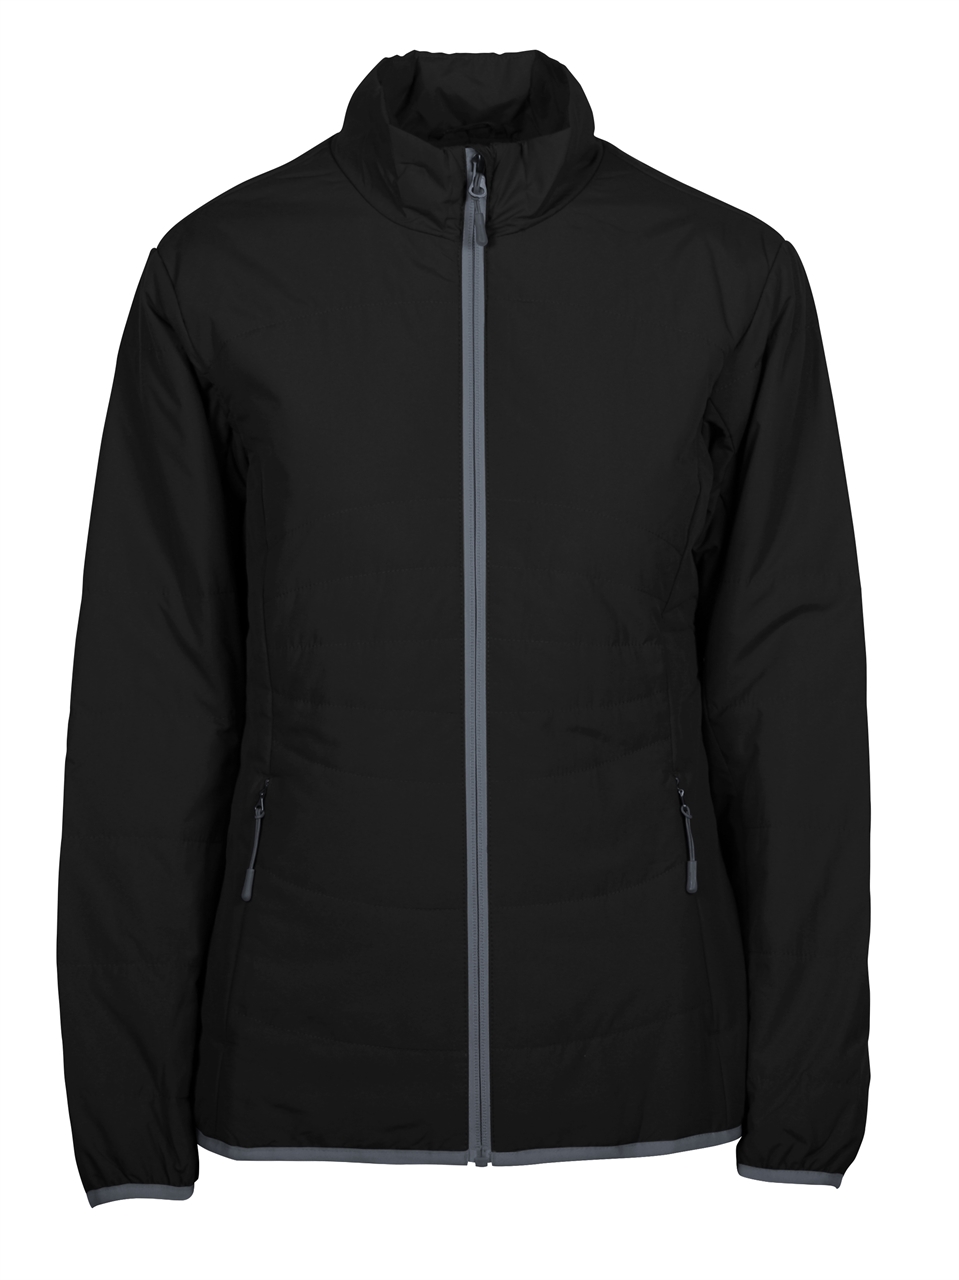 North End 78231 Ladies Interactive Insulated Packable Jacket Black/Dark Graphite XL 